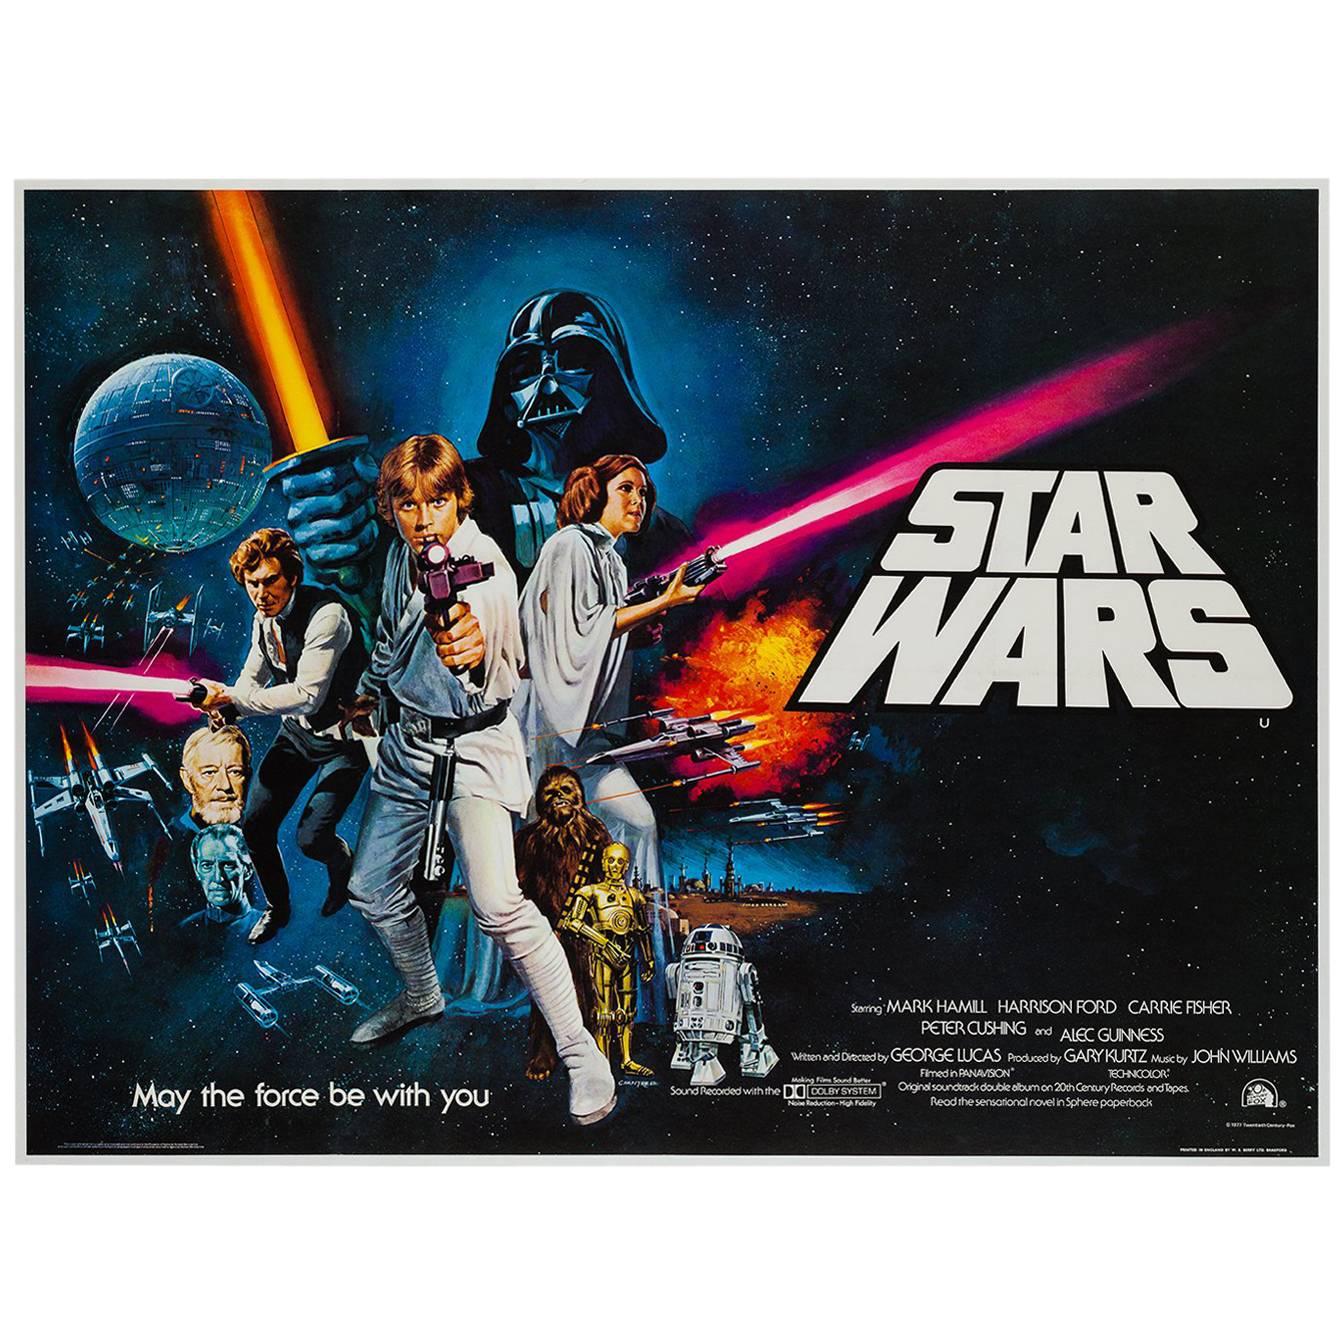 Star Wars Original UK Film Poster, Tom Chantrell, 1977